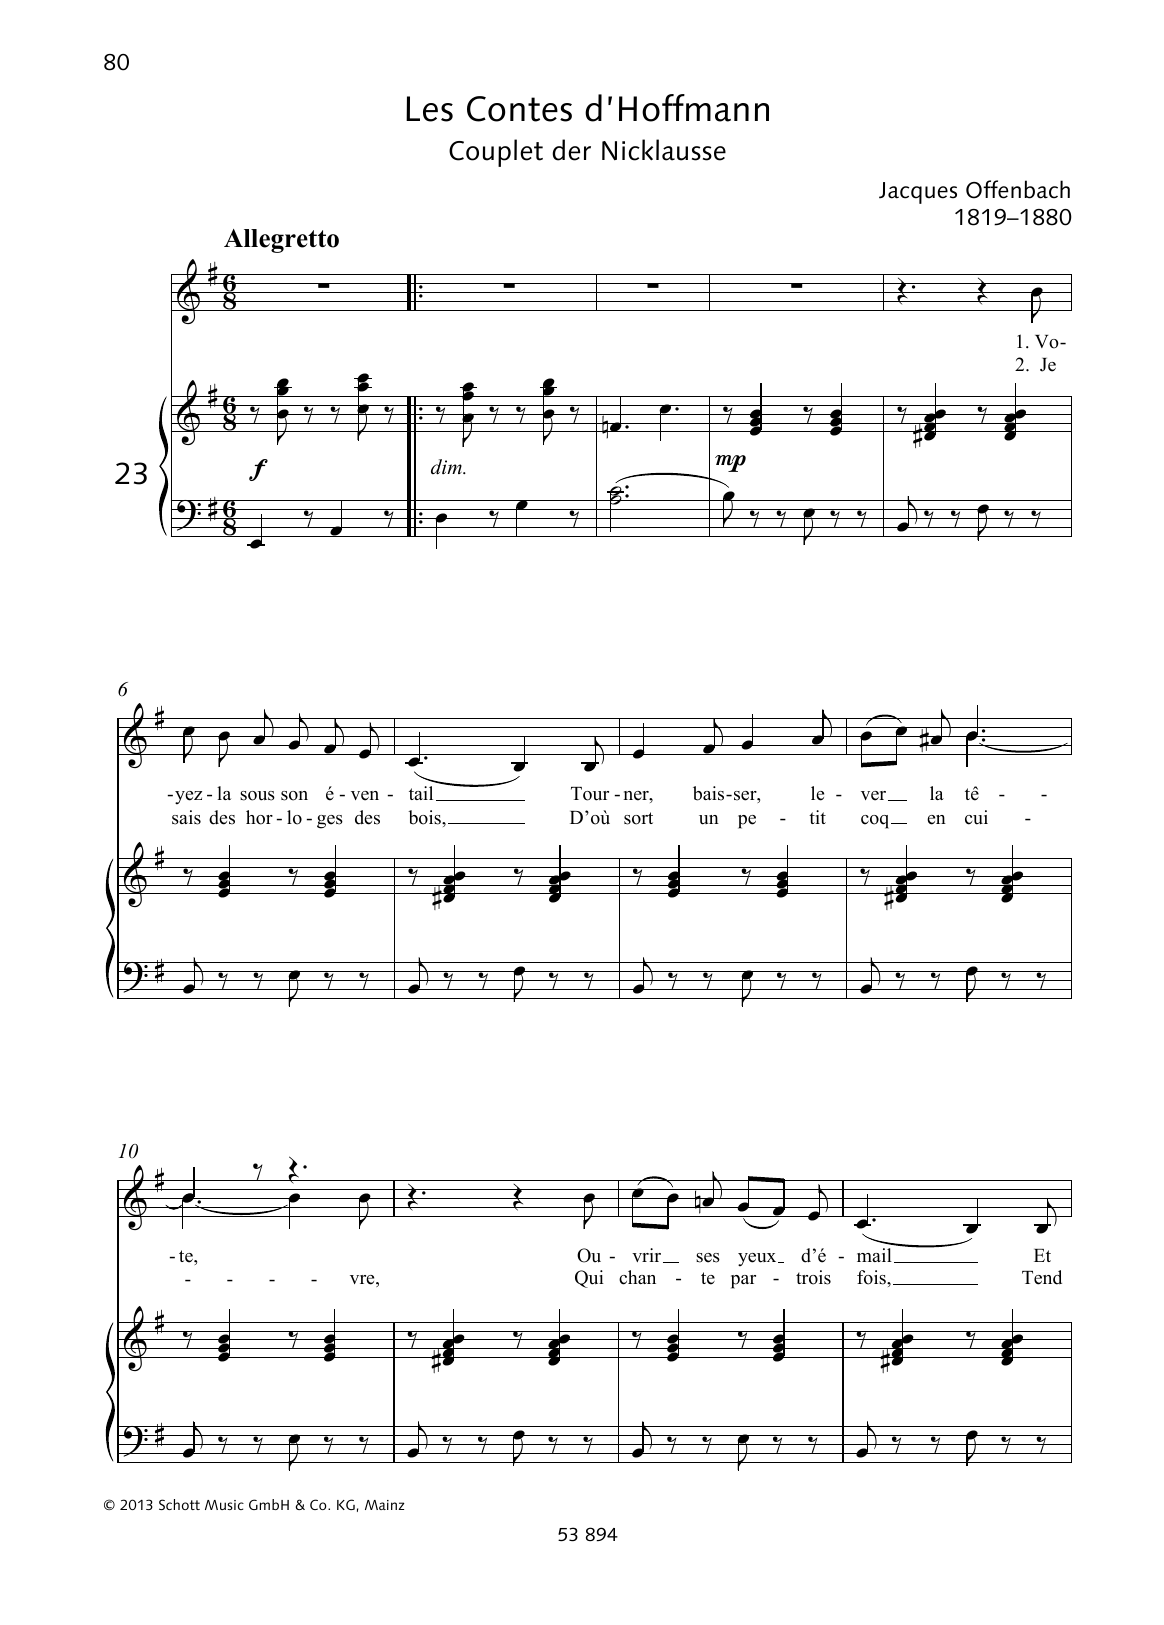 Jacques Offenbach Voyez-la sous son éventail Sheet Music Notes & Chords for Piano & Vocal - Download or Print PDF